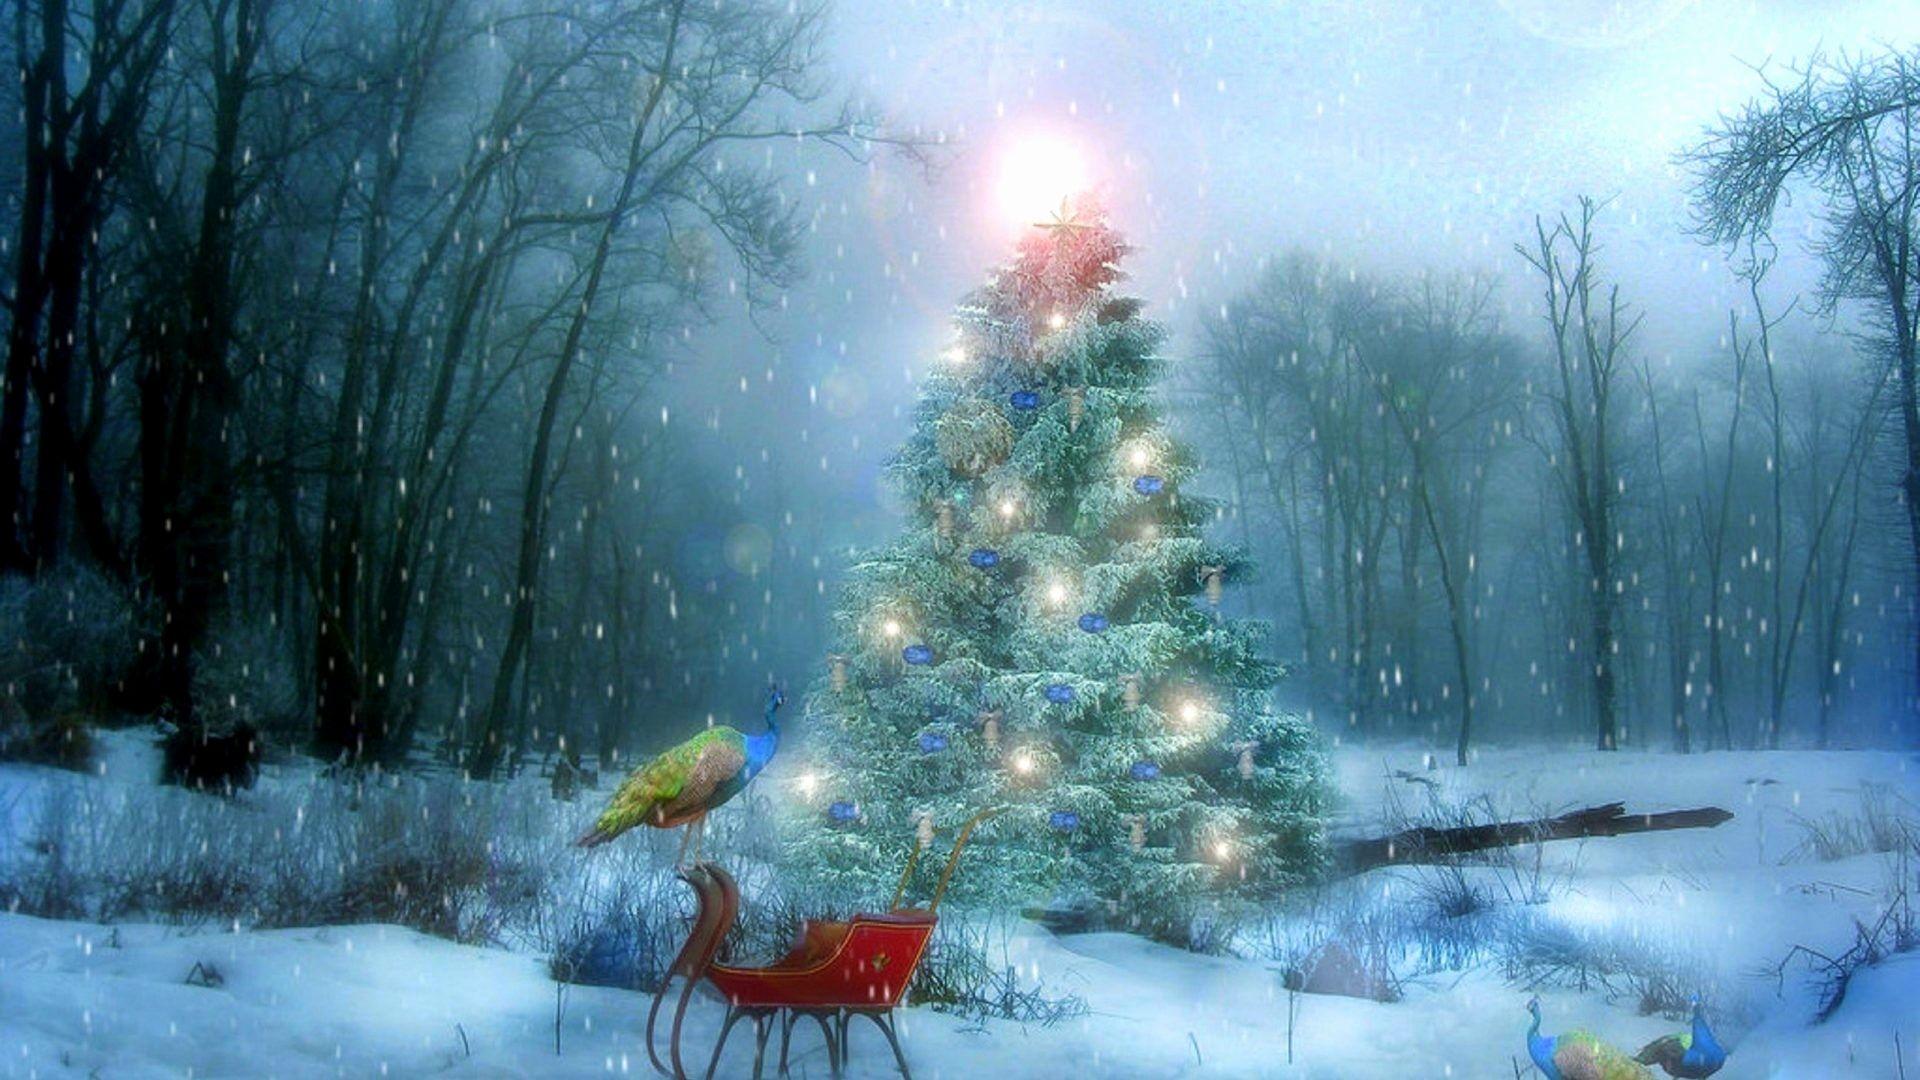 Christmas Snow Scenes Wallpapers - Top Free Christmas Snow Scenes ...